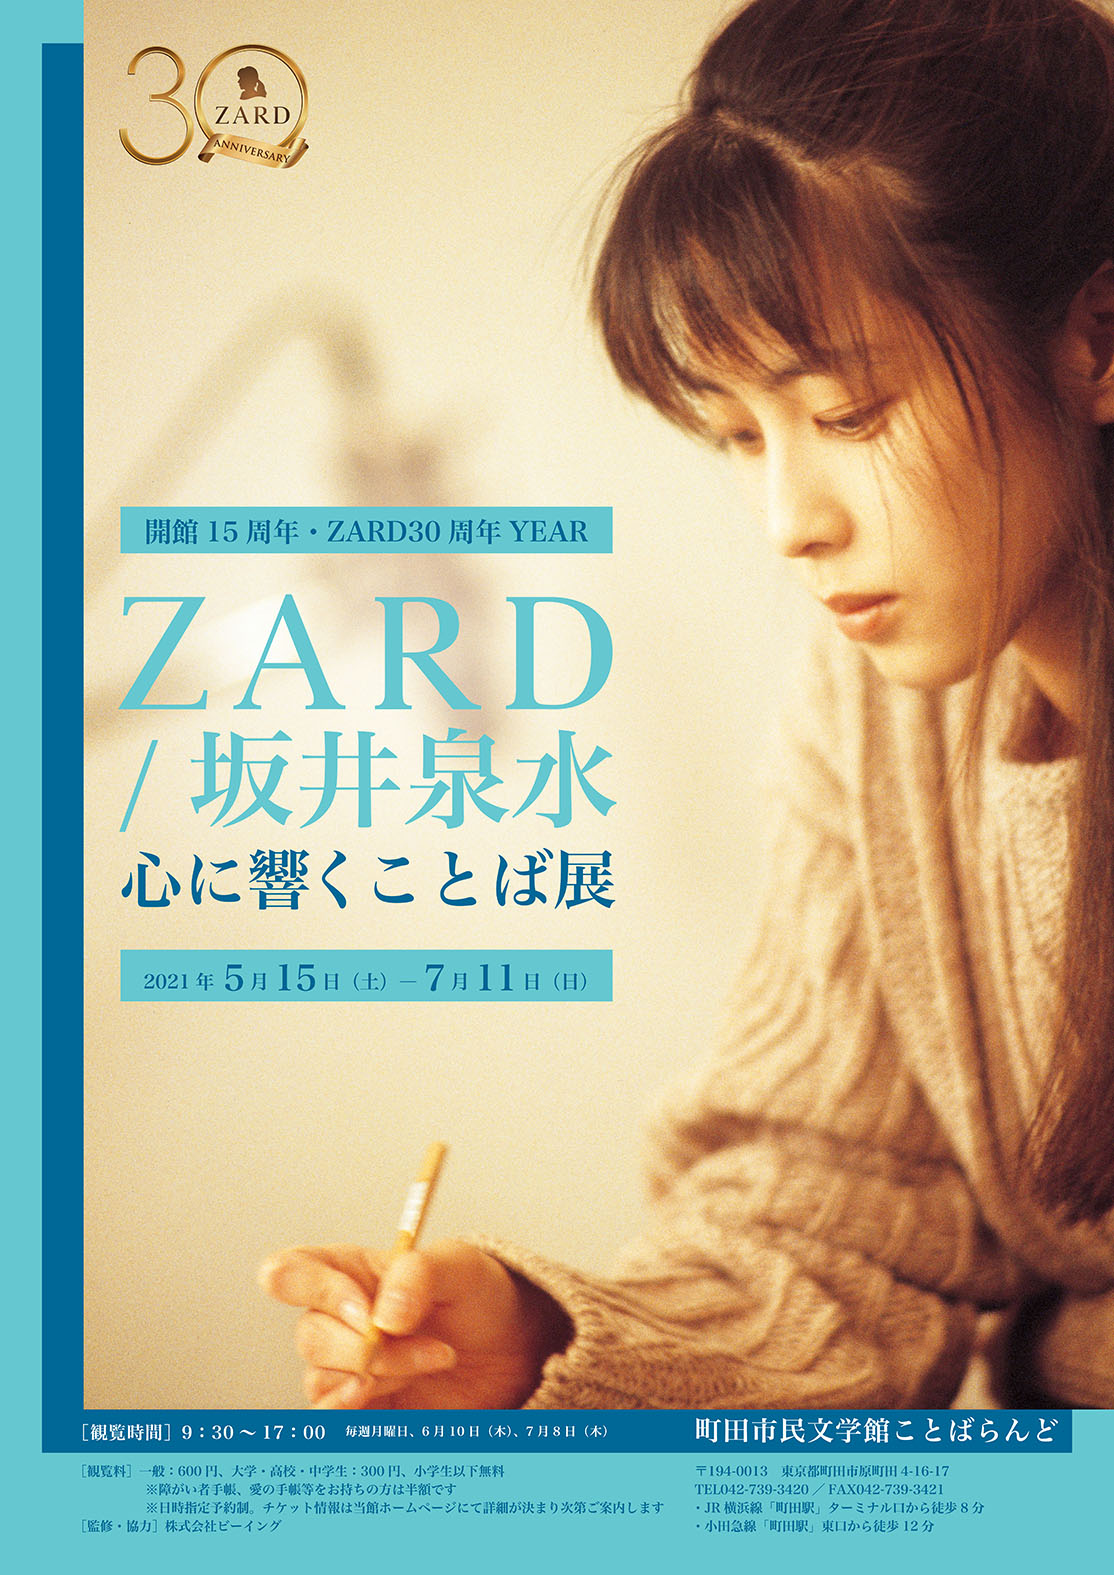 Zardデビュー30周年記念 Zard 坂井泉水の詞に迫る展覧会開催決定 Musicman